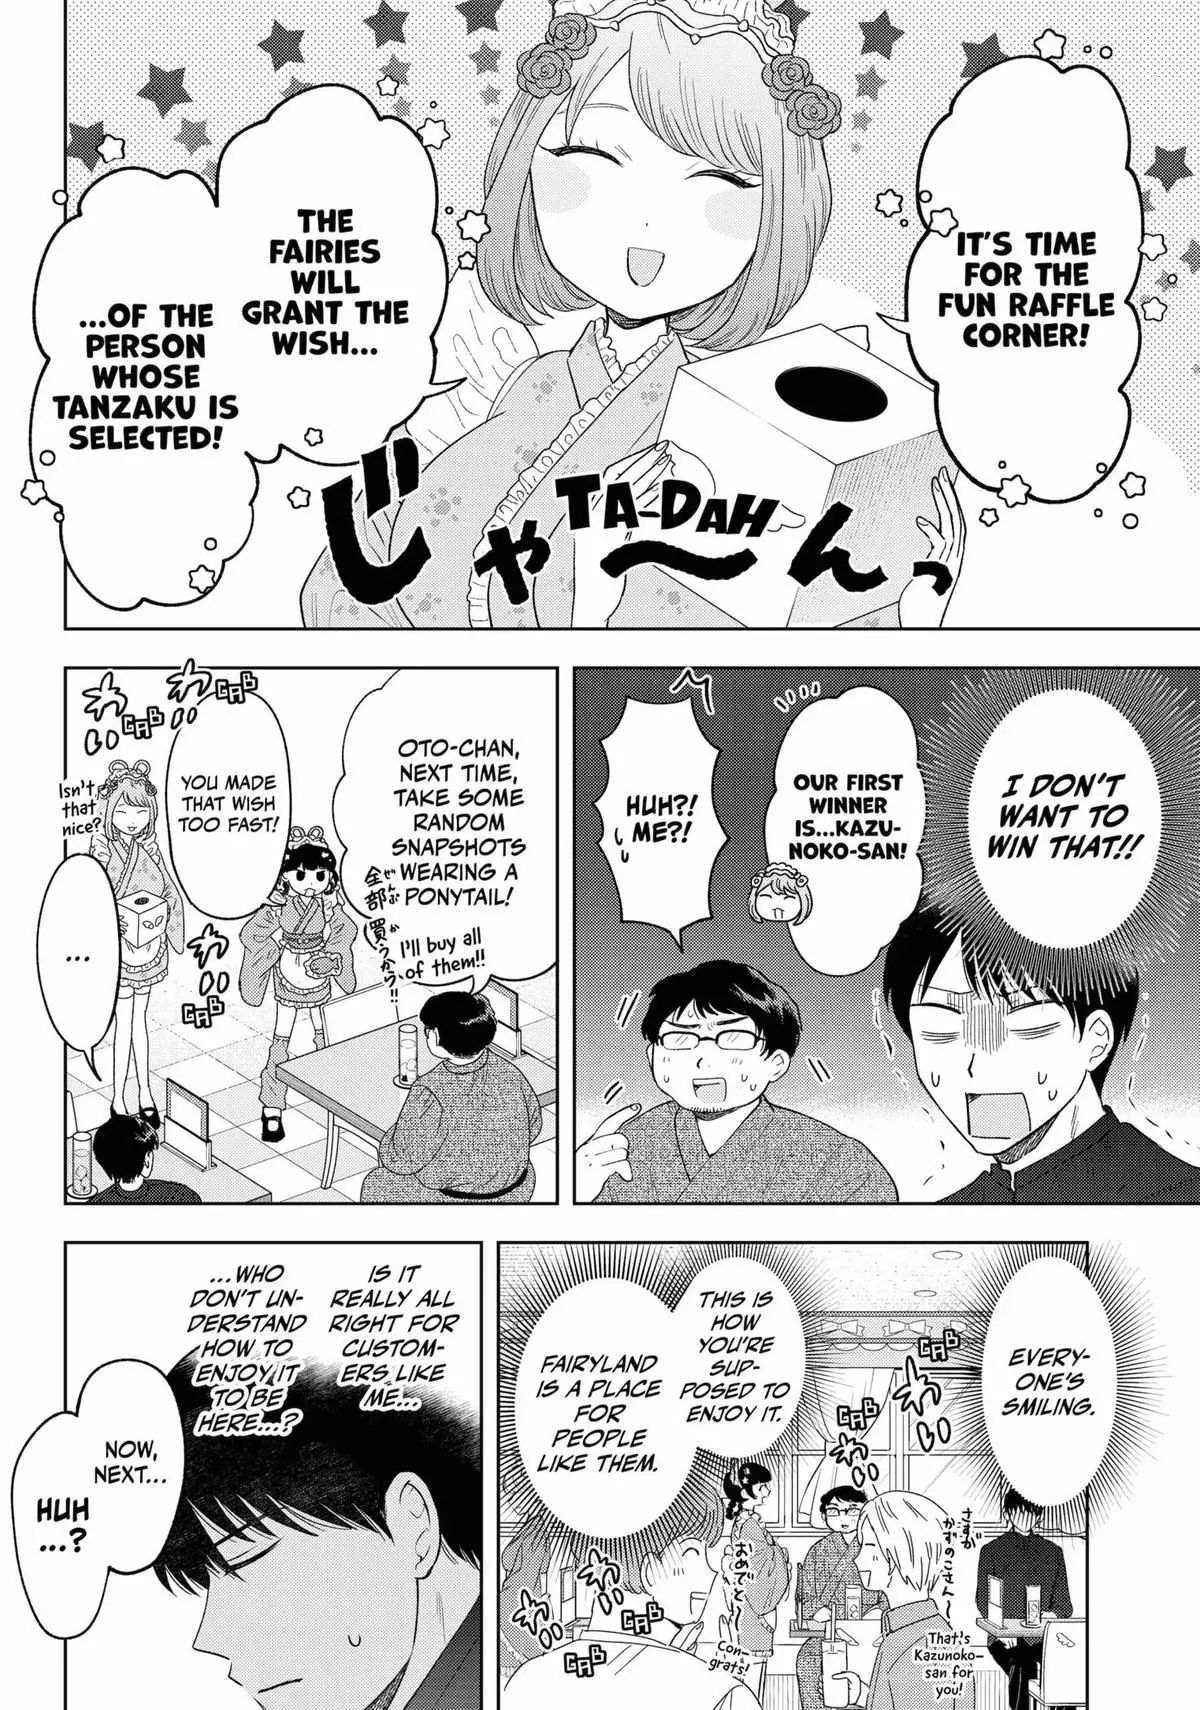 Tsuruko Returns The Favor - 14 page 14-e04f4730